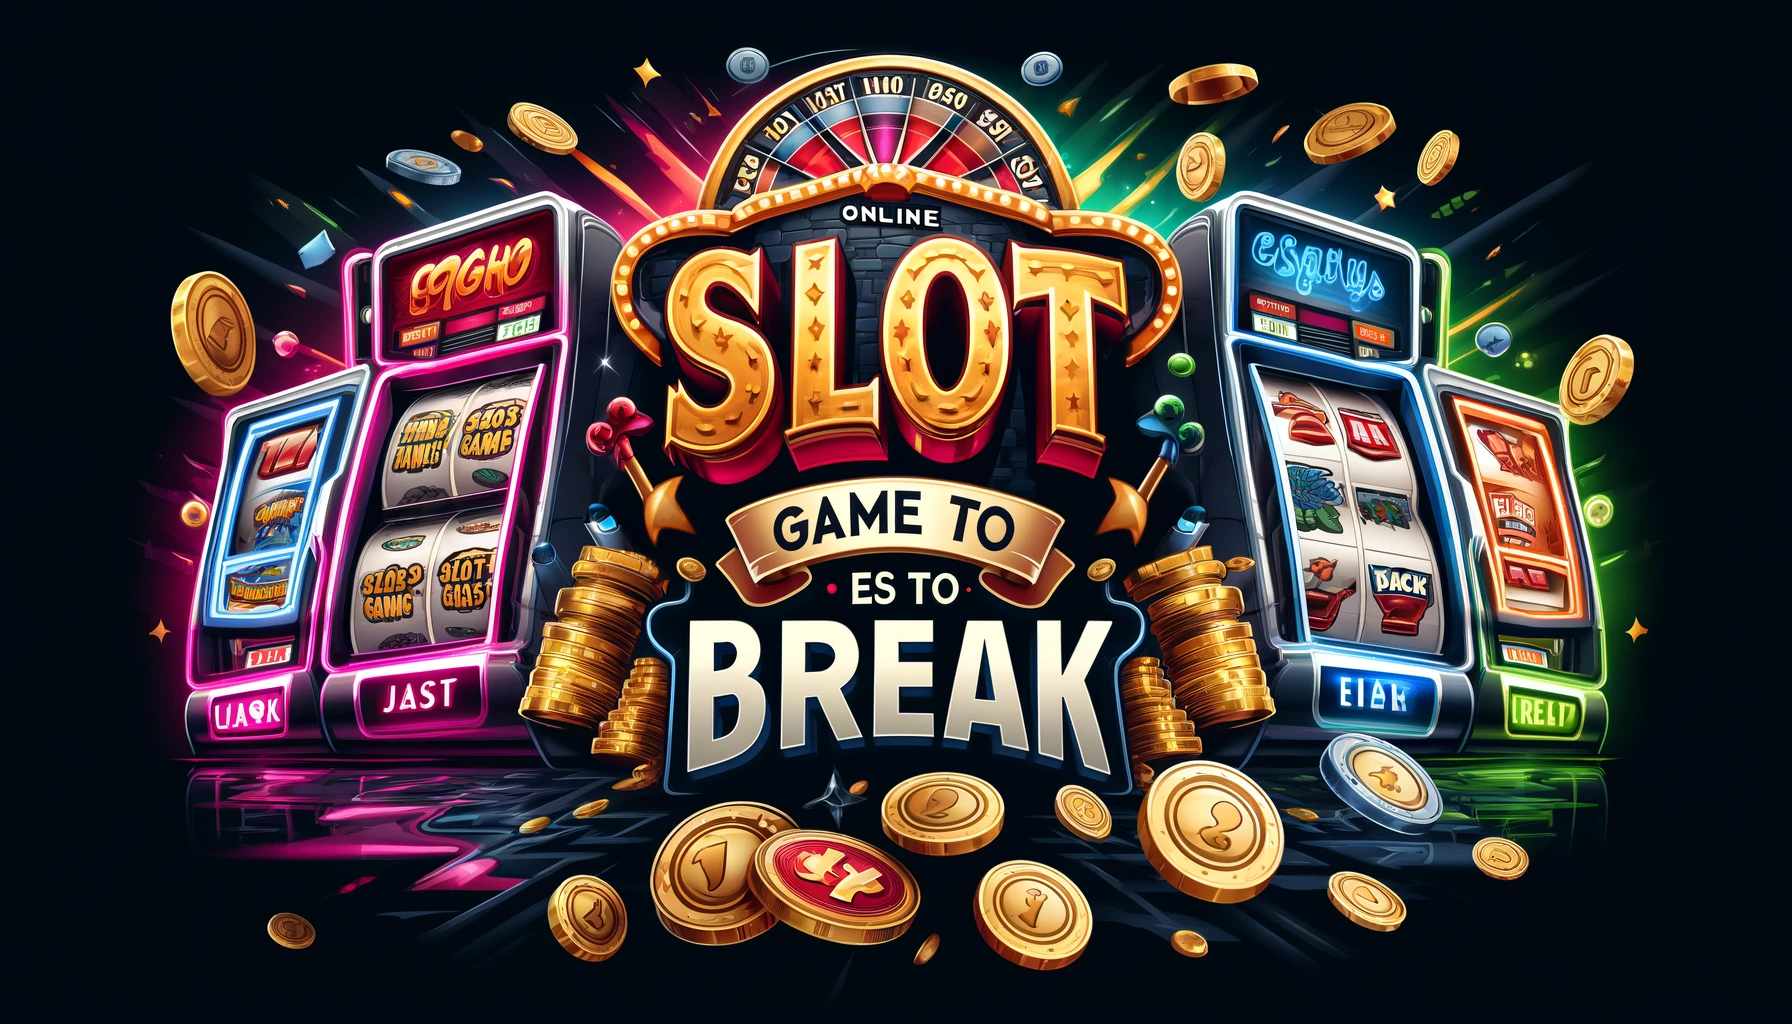 Slot games are easy to break